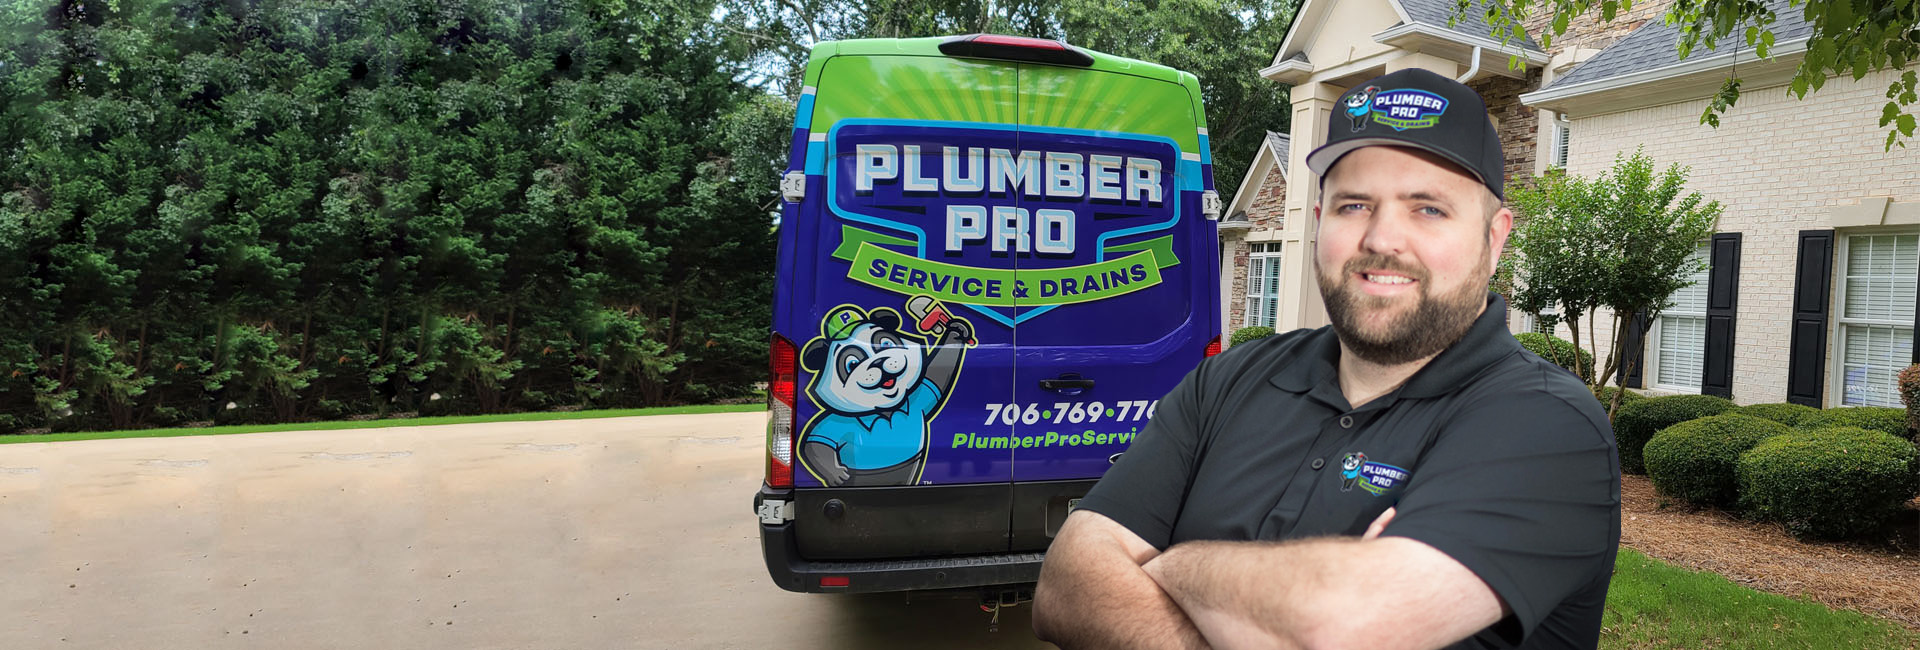 plumber pro van with sam